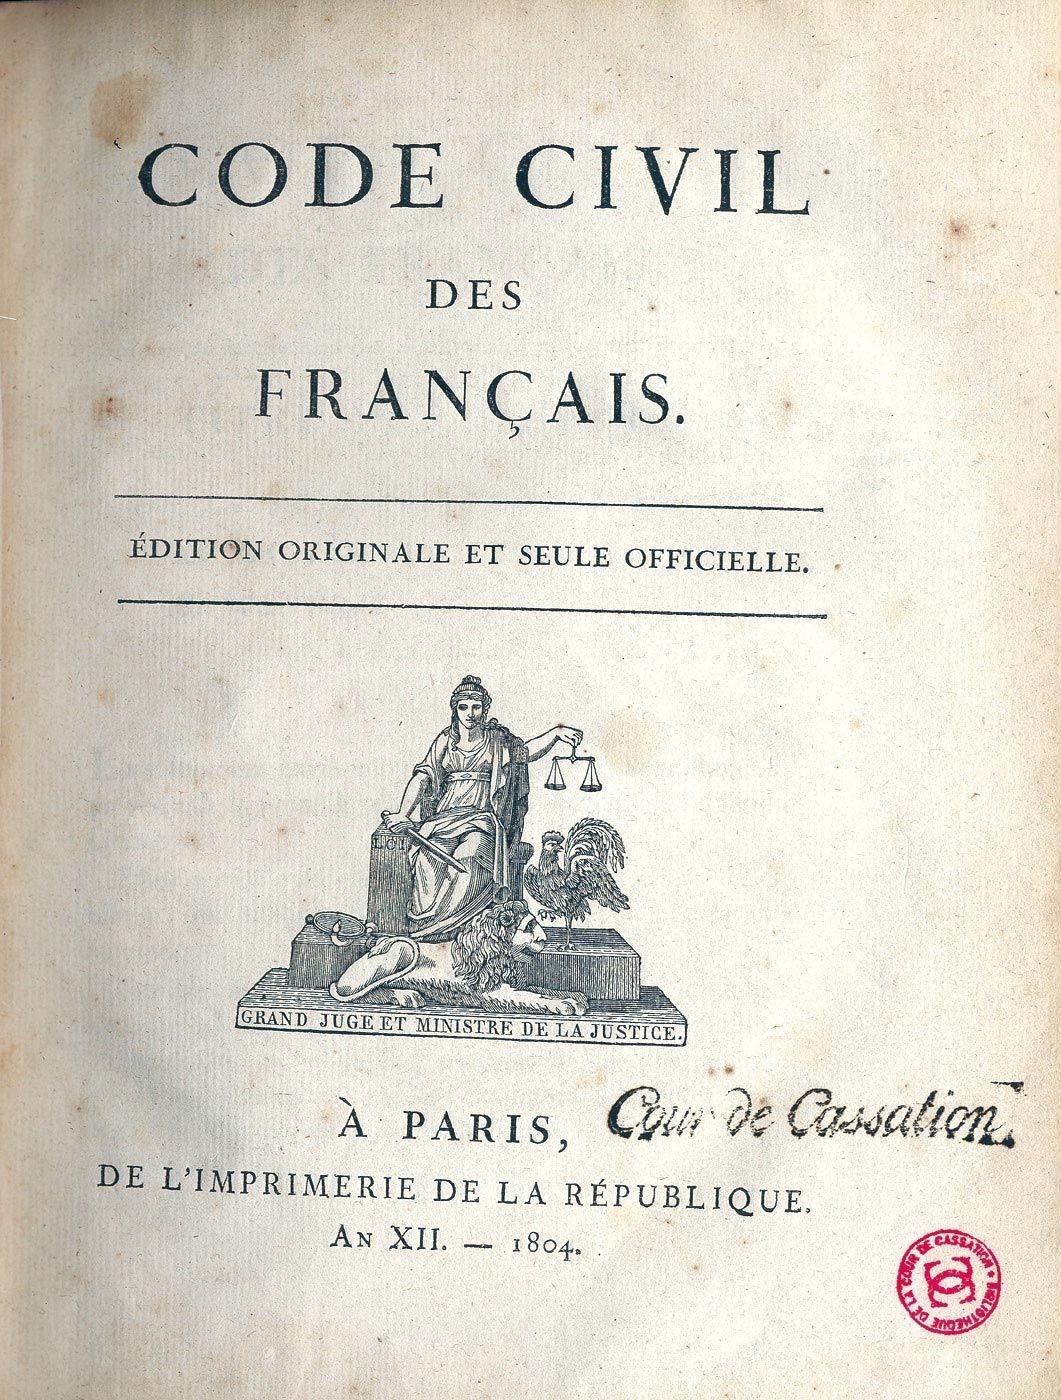 Doc. 2 : Le Code civil